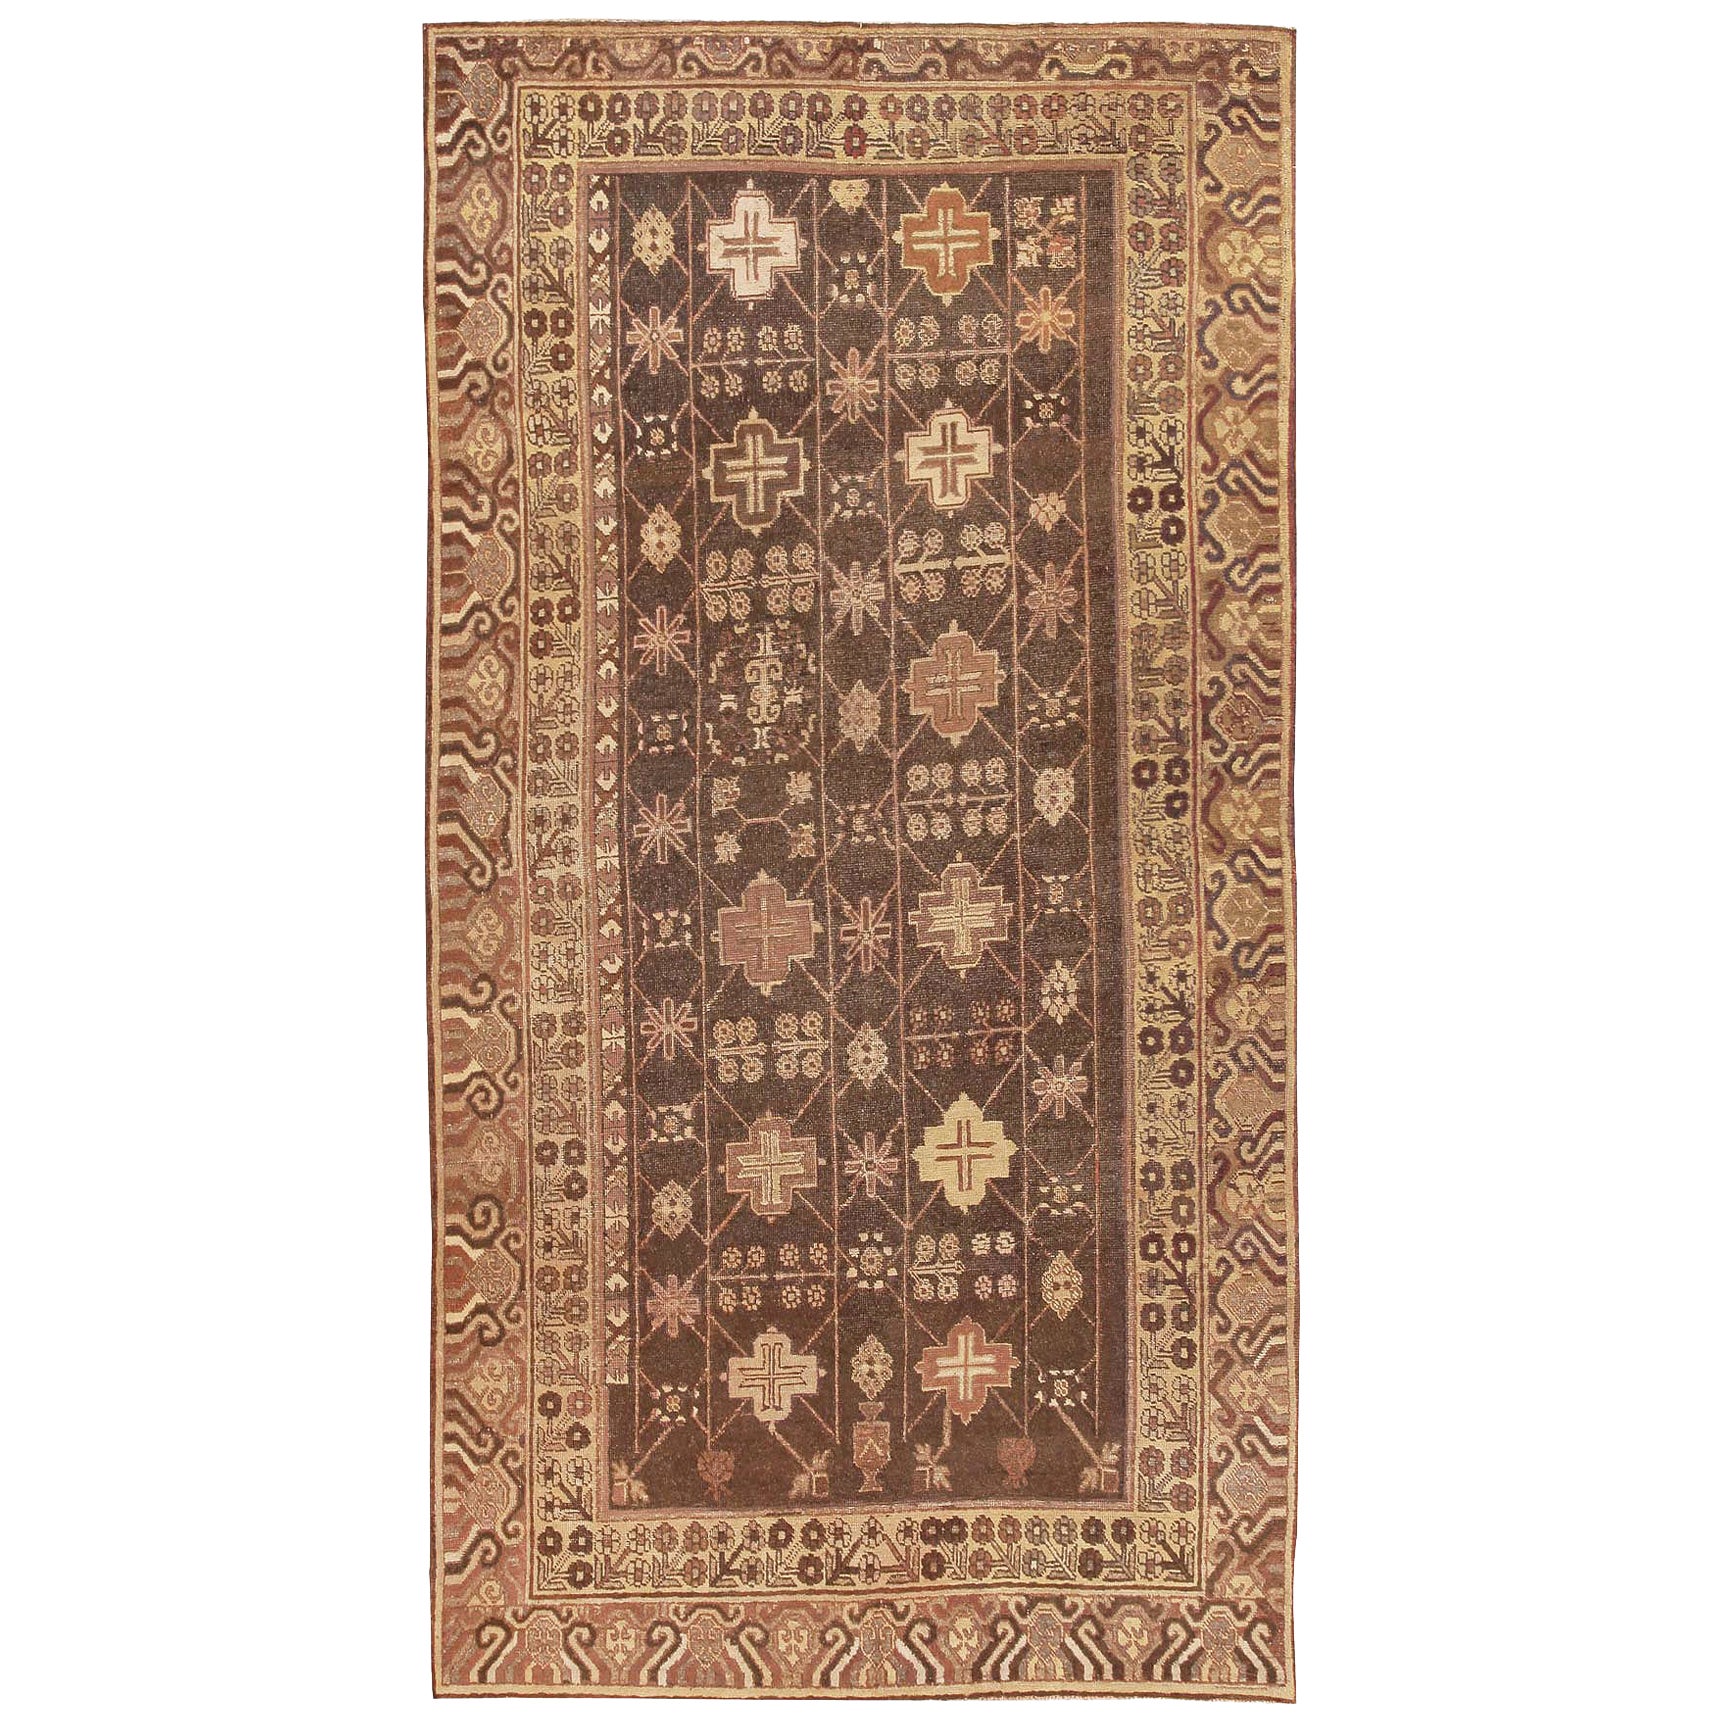 Antique Khotan Rug. Size: 5 ft 1 in x 10 ft 3 in  For Sale